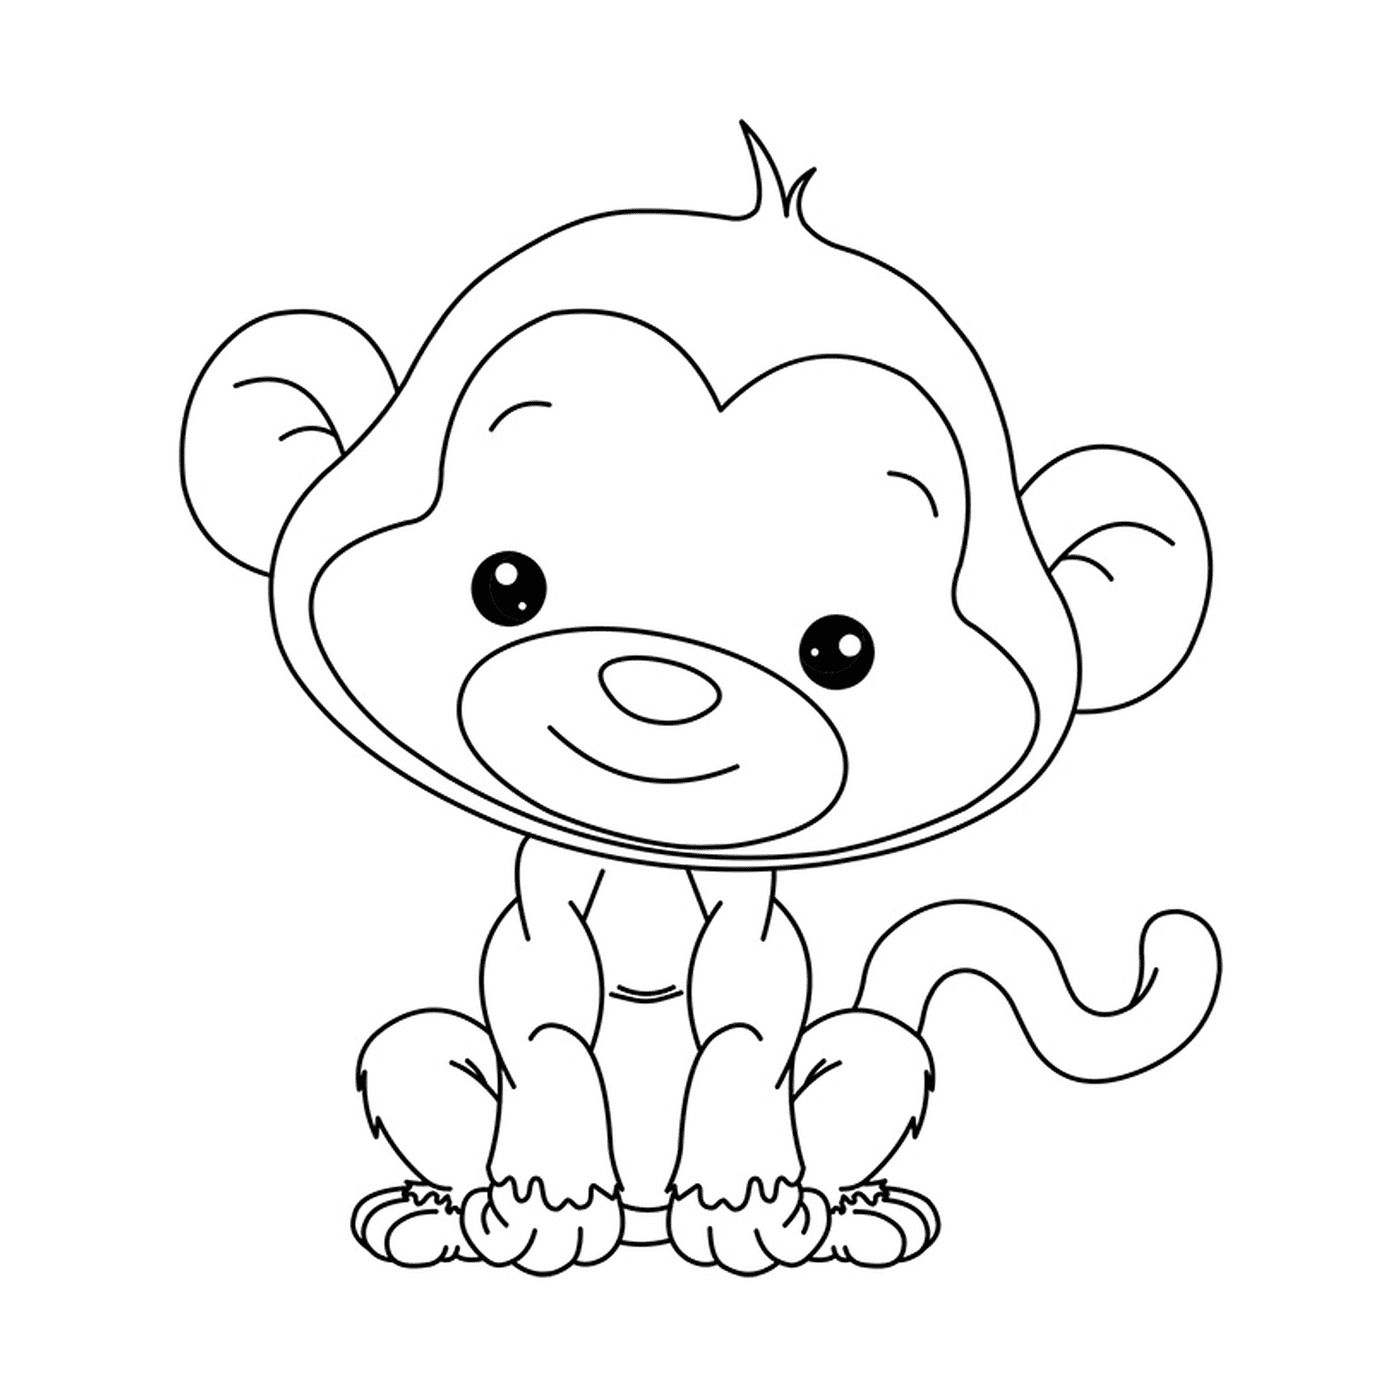  an adorable monkey 